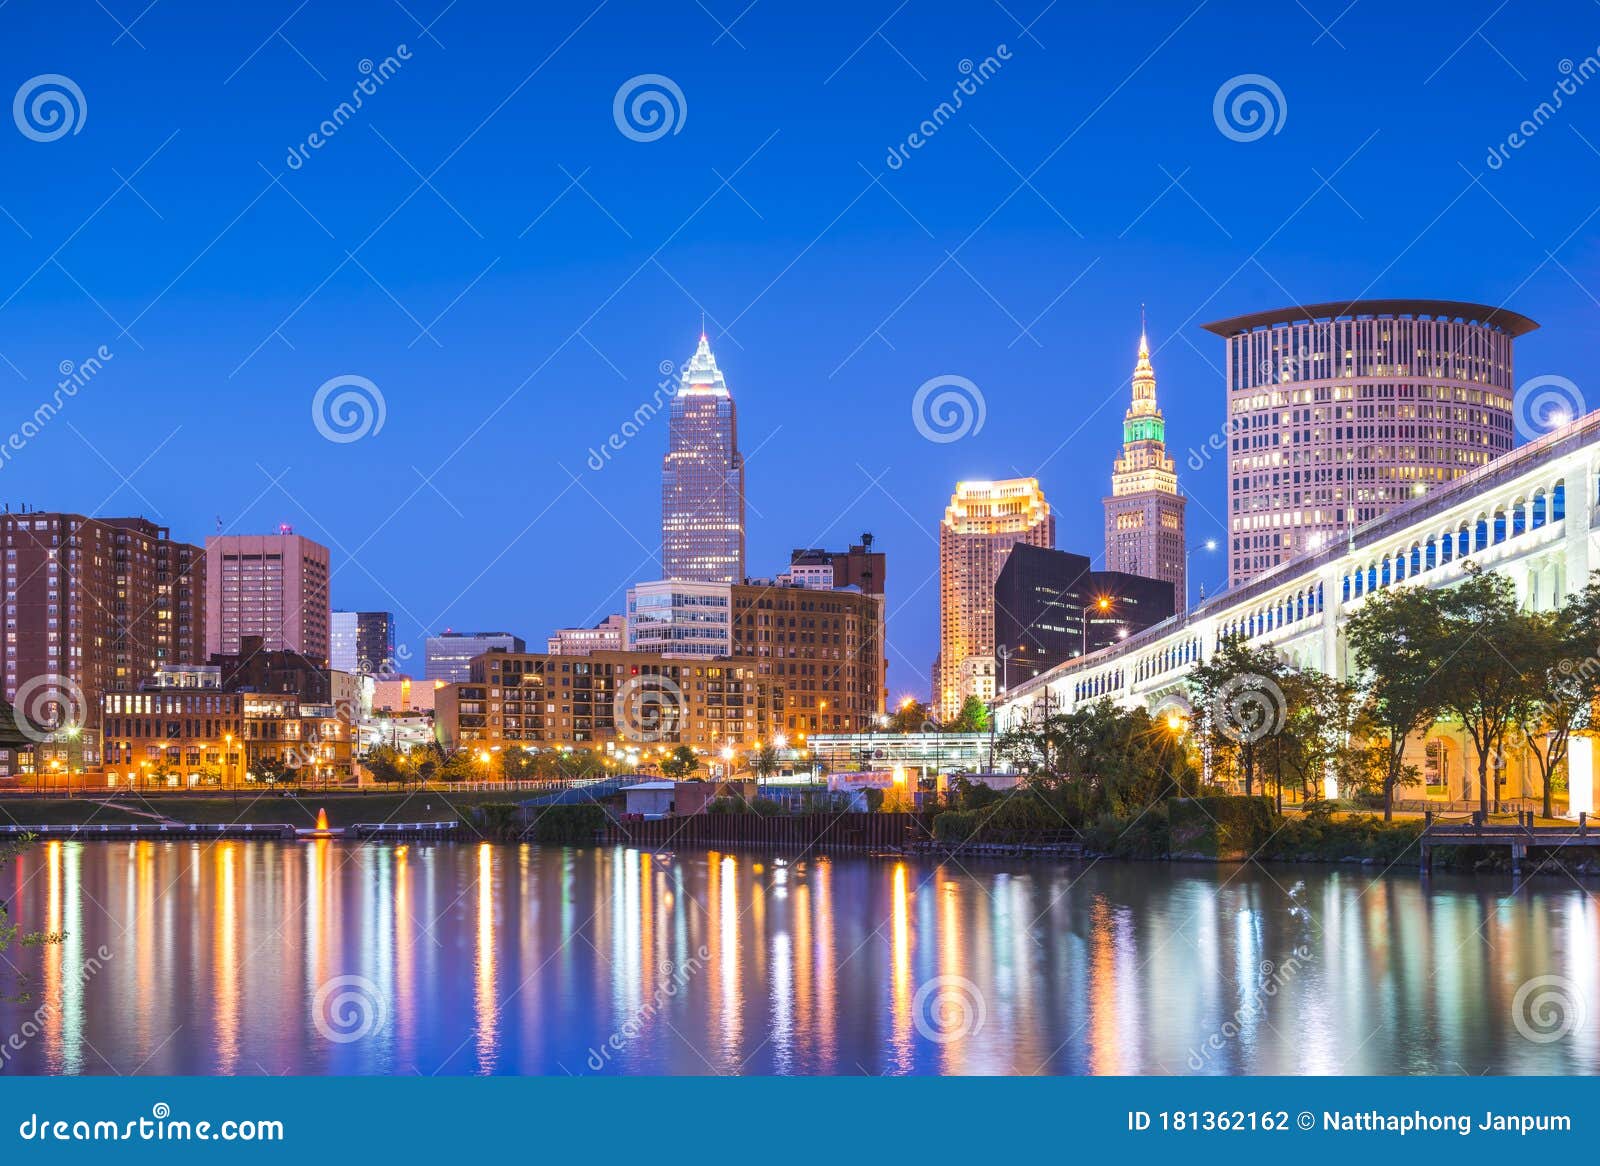 Cleveland Skyline With Reflection At Night Cleveland Ohio Usa Stock